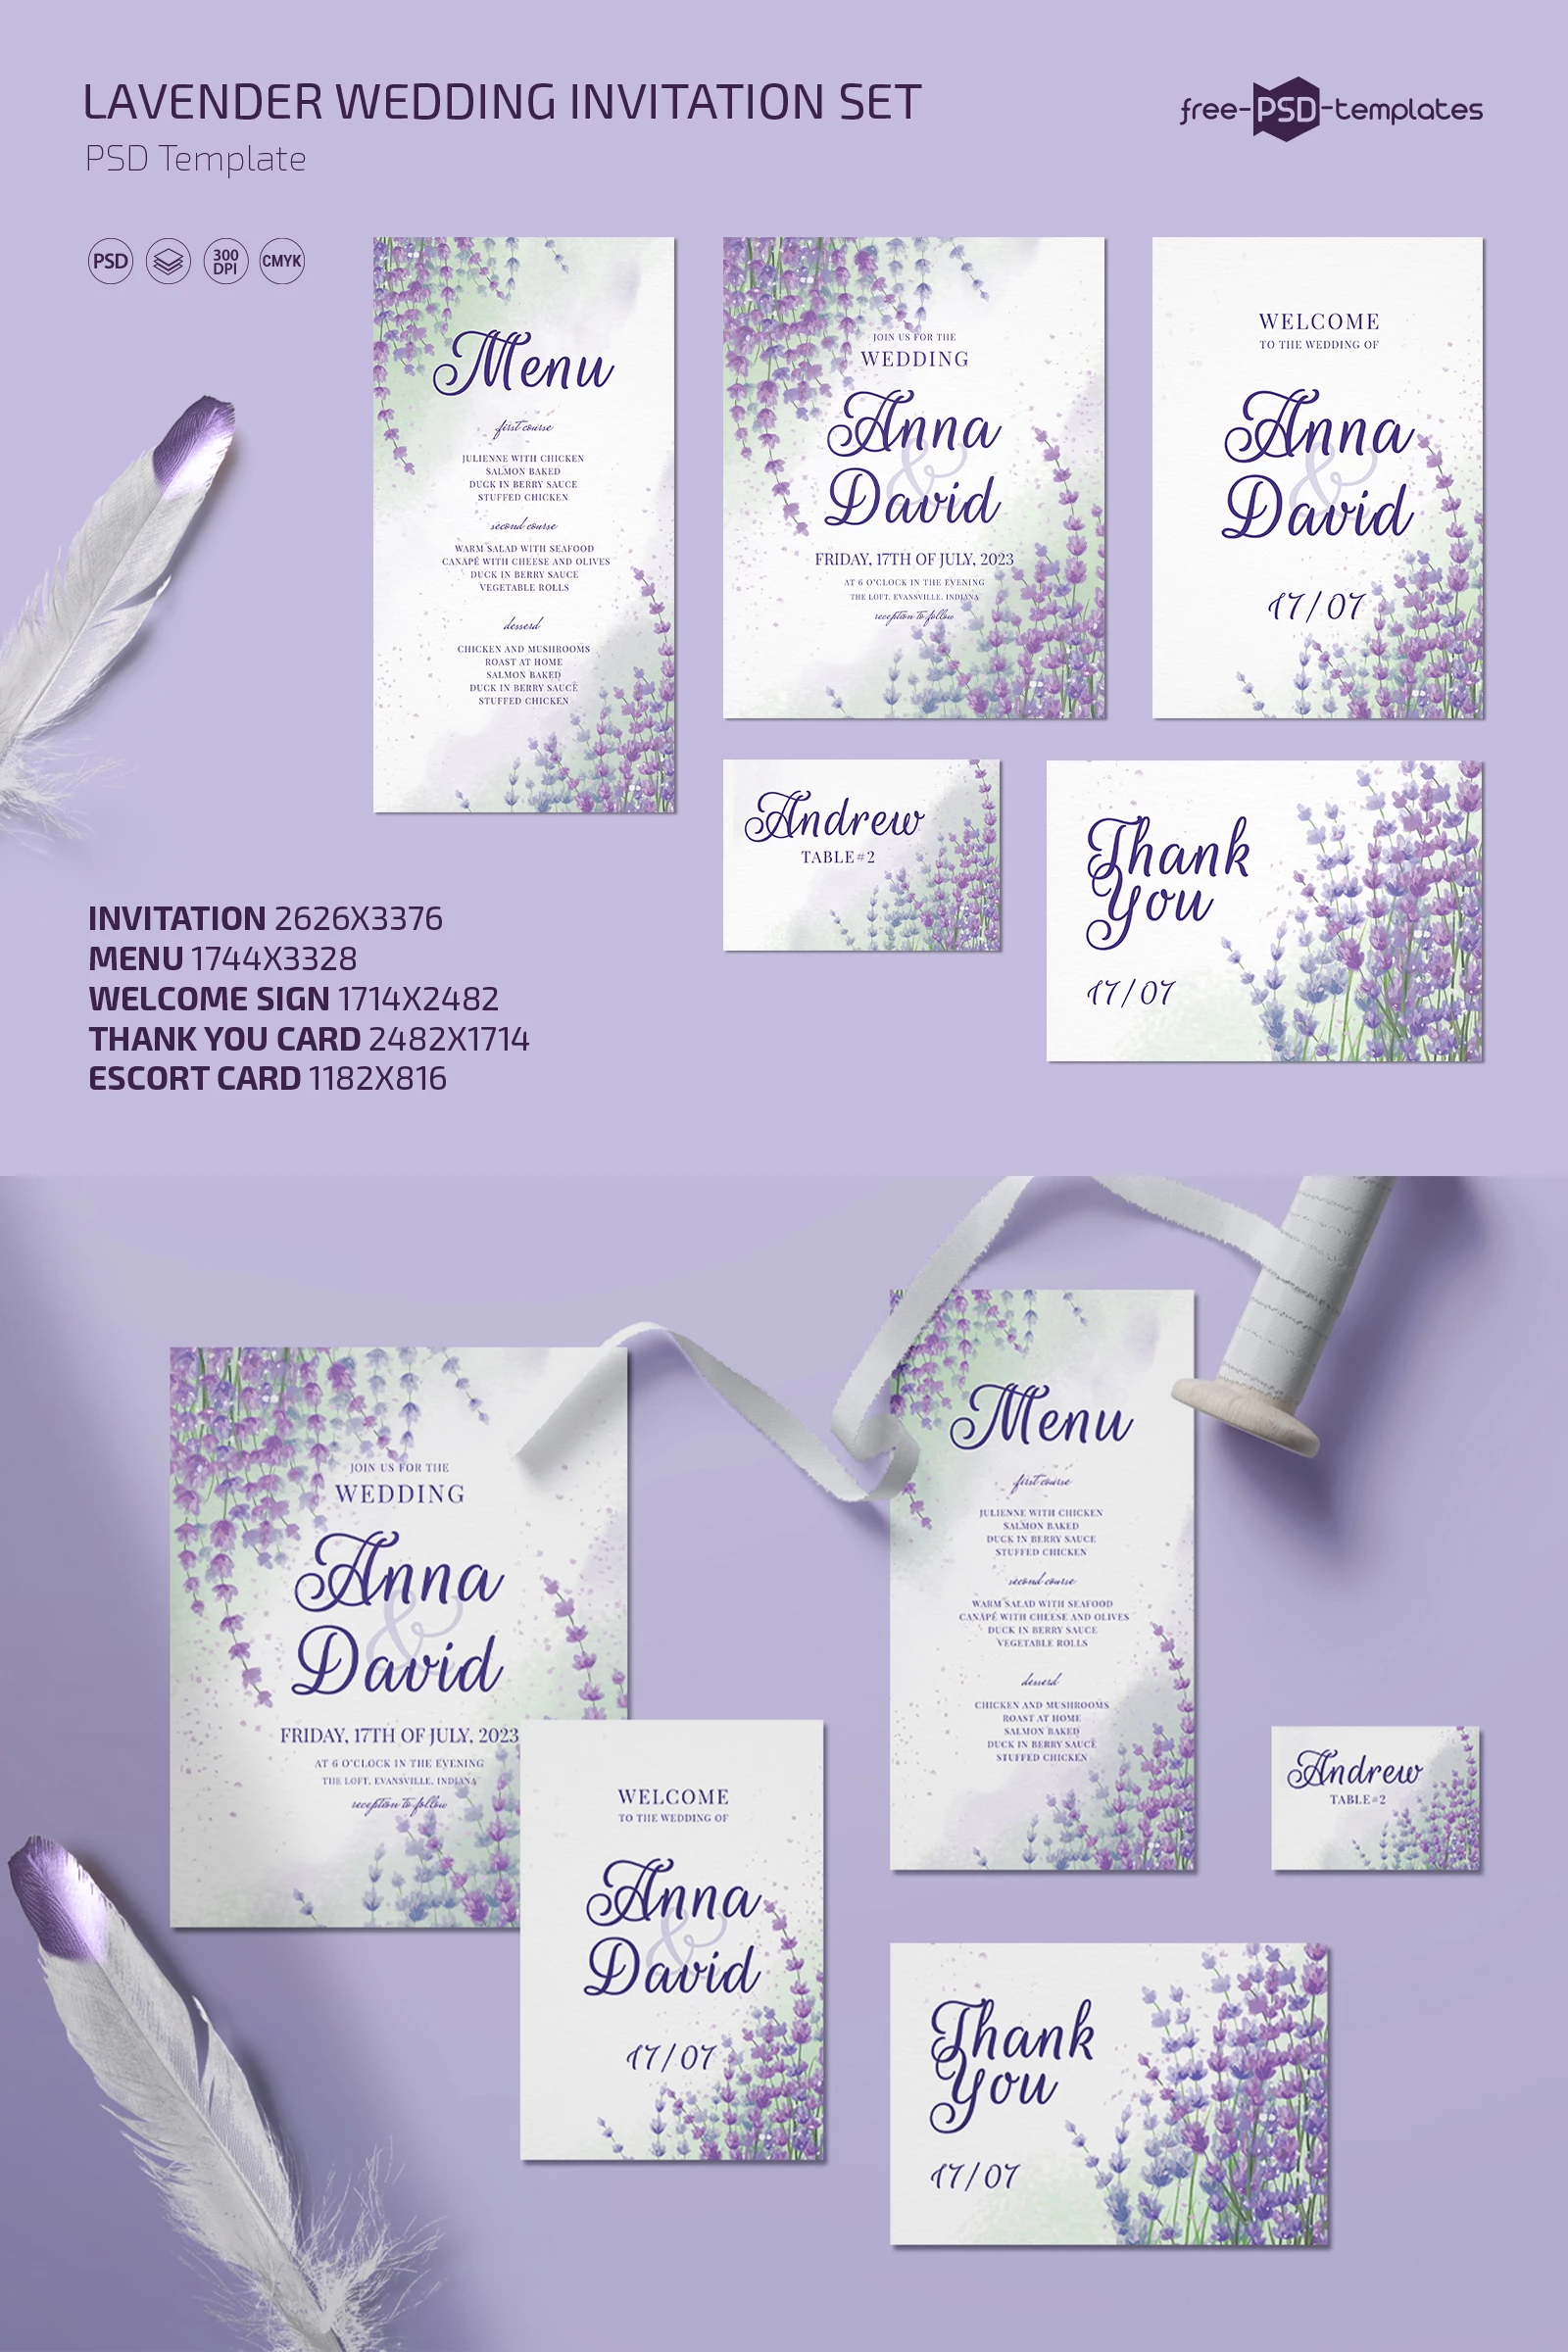 Free Lavender Wedding Invitation Set